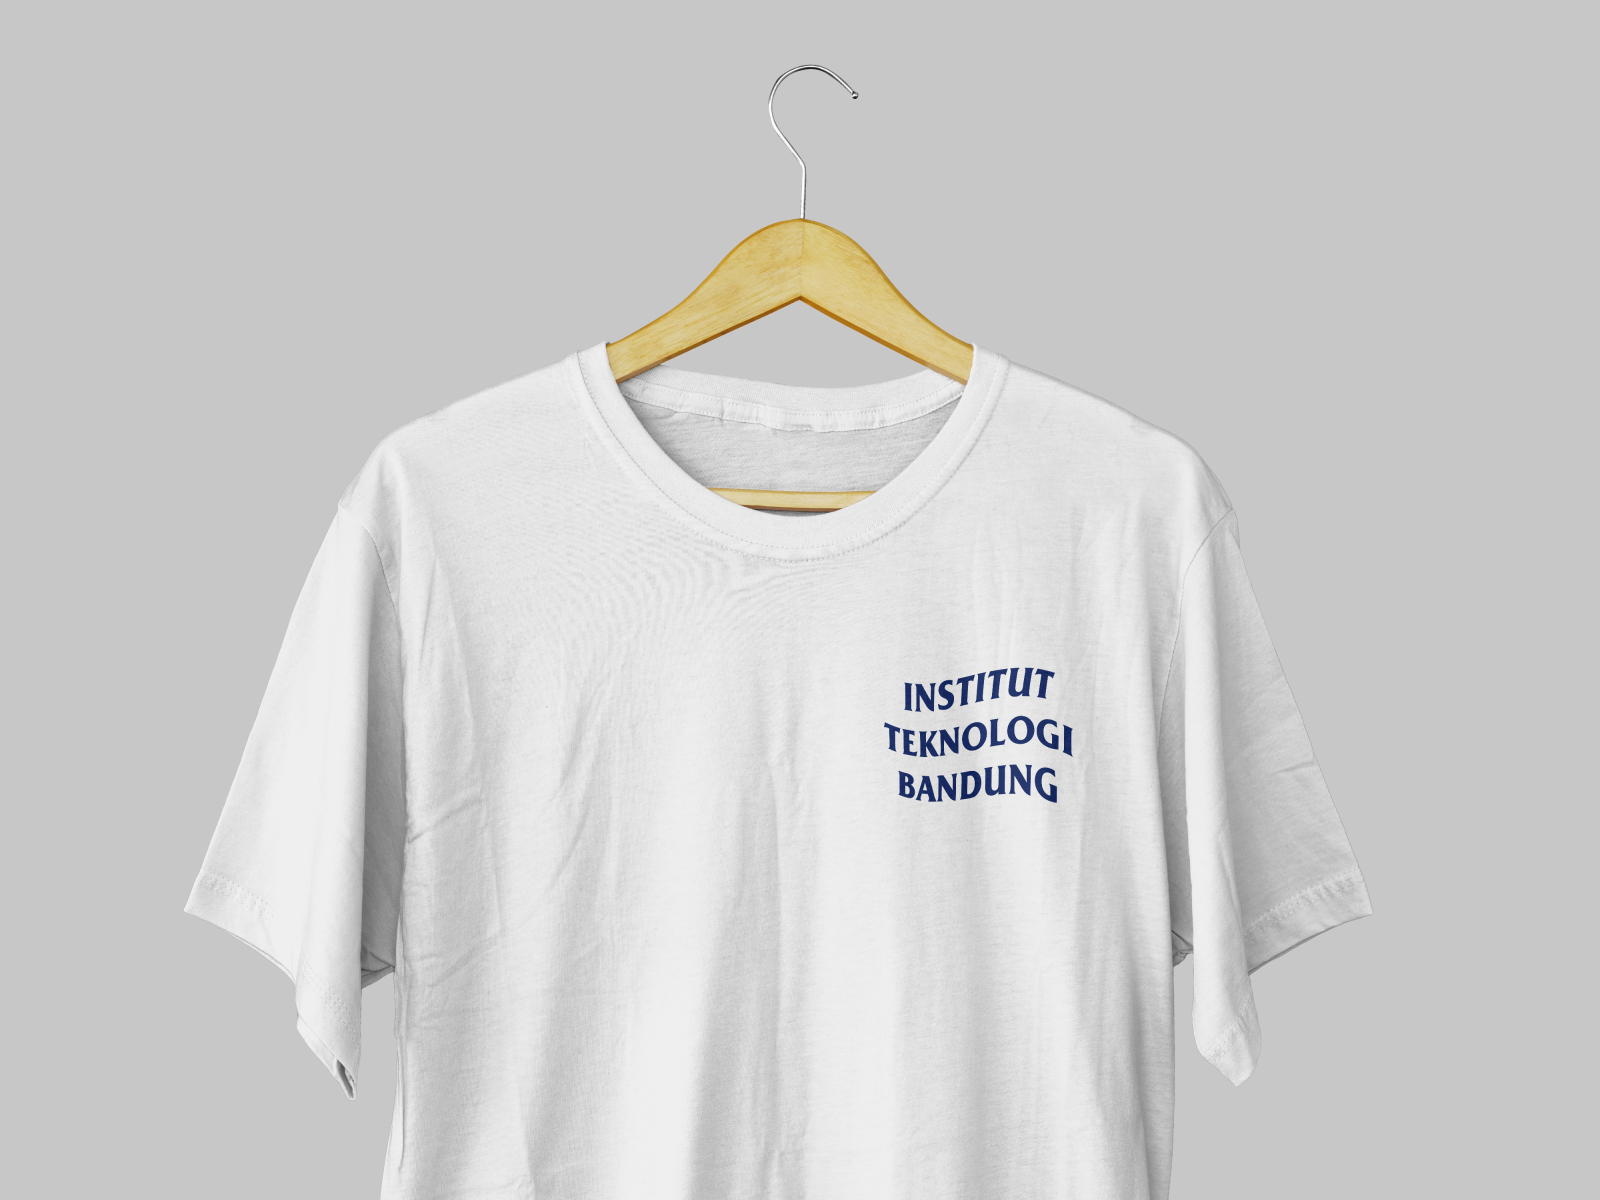 ITB T-Shirt by Agung Brawida on Dribbble